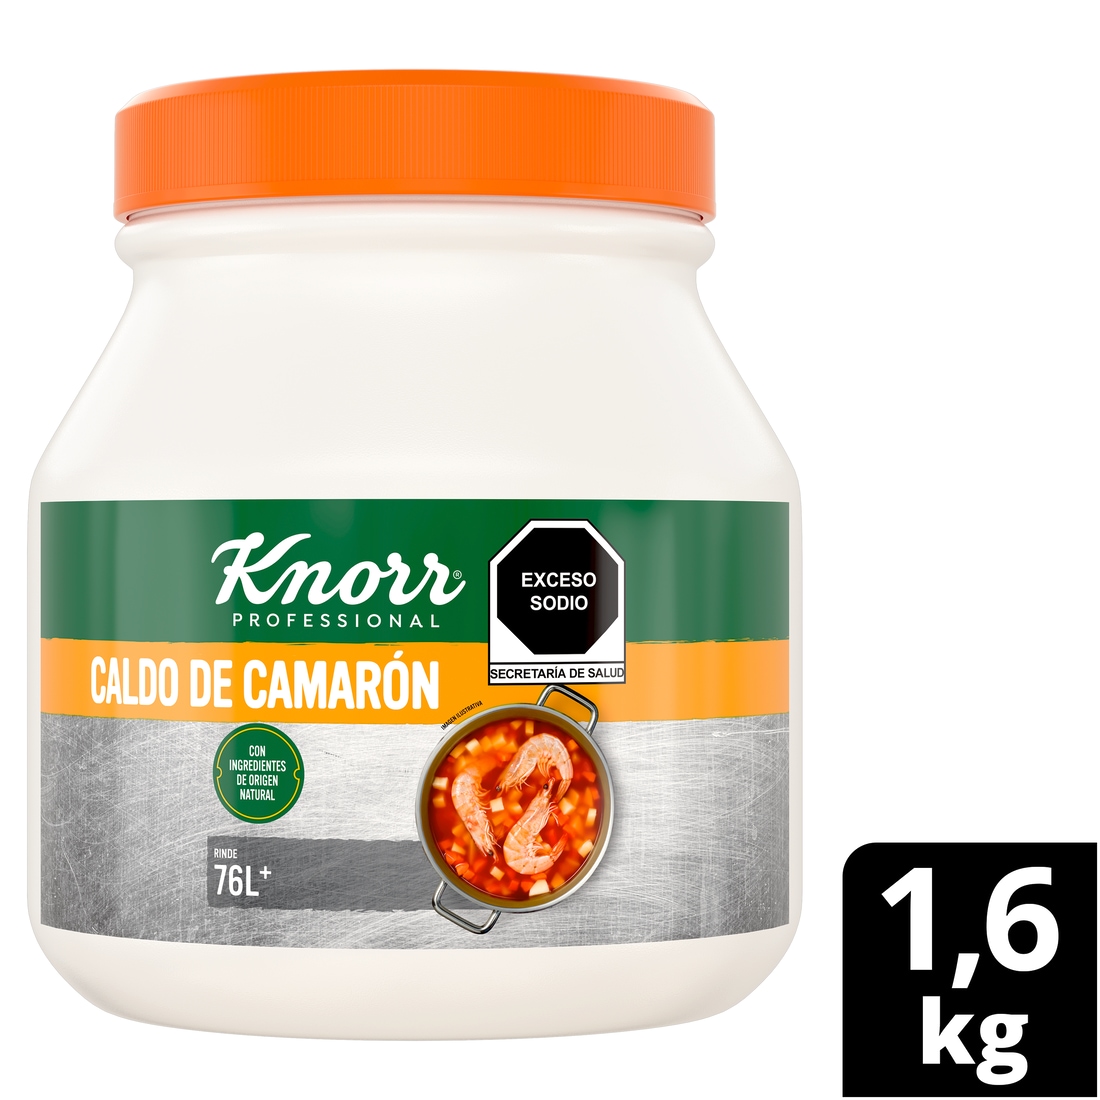 Knorr® Professional Caldo de Camarón 1,6 Kg - 